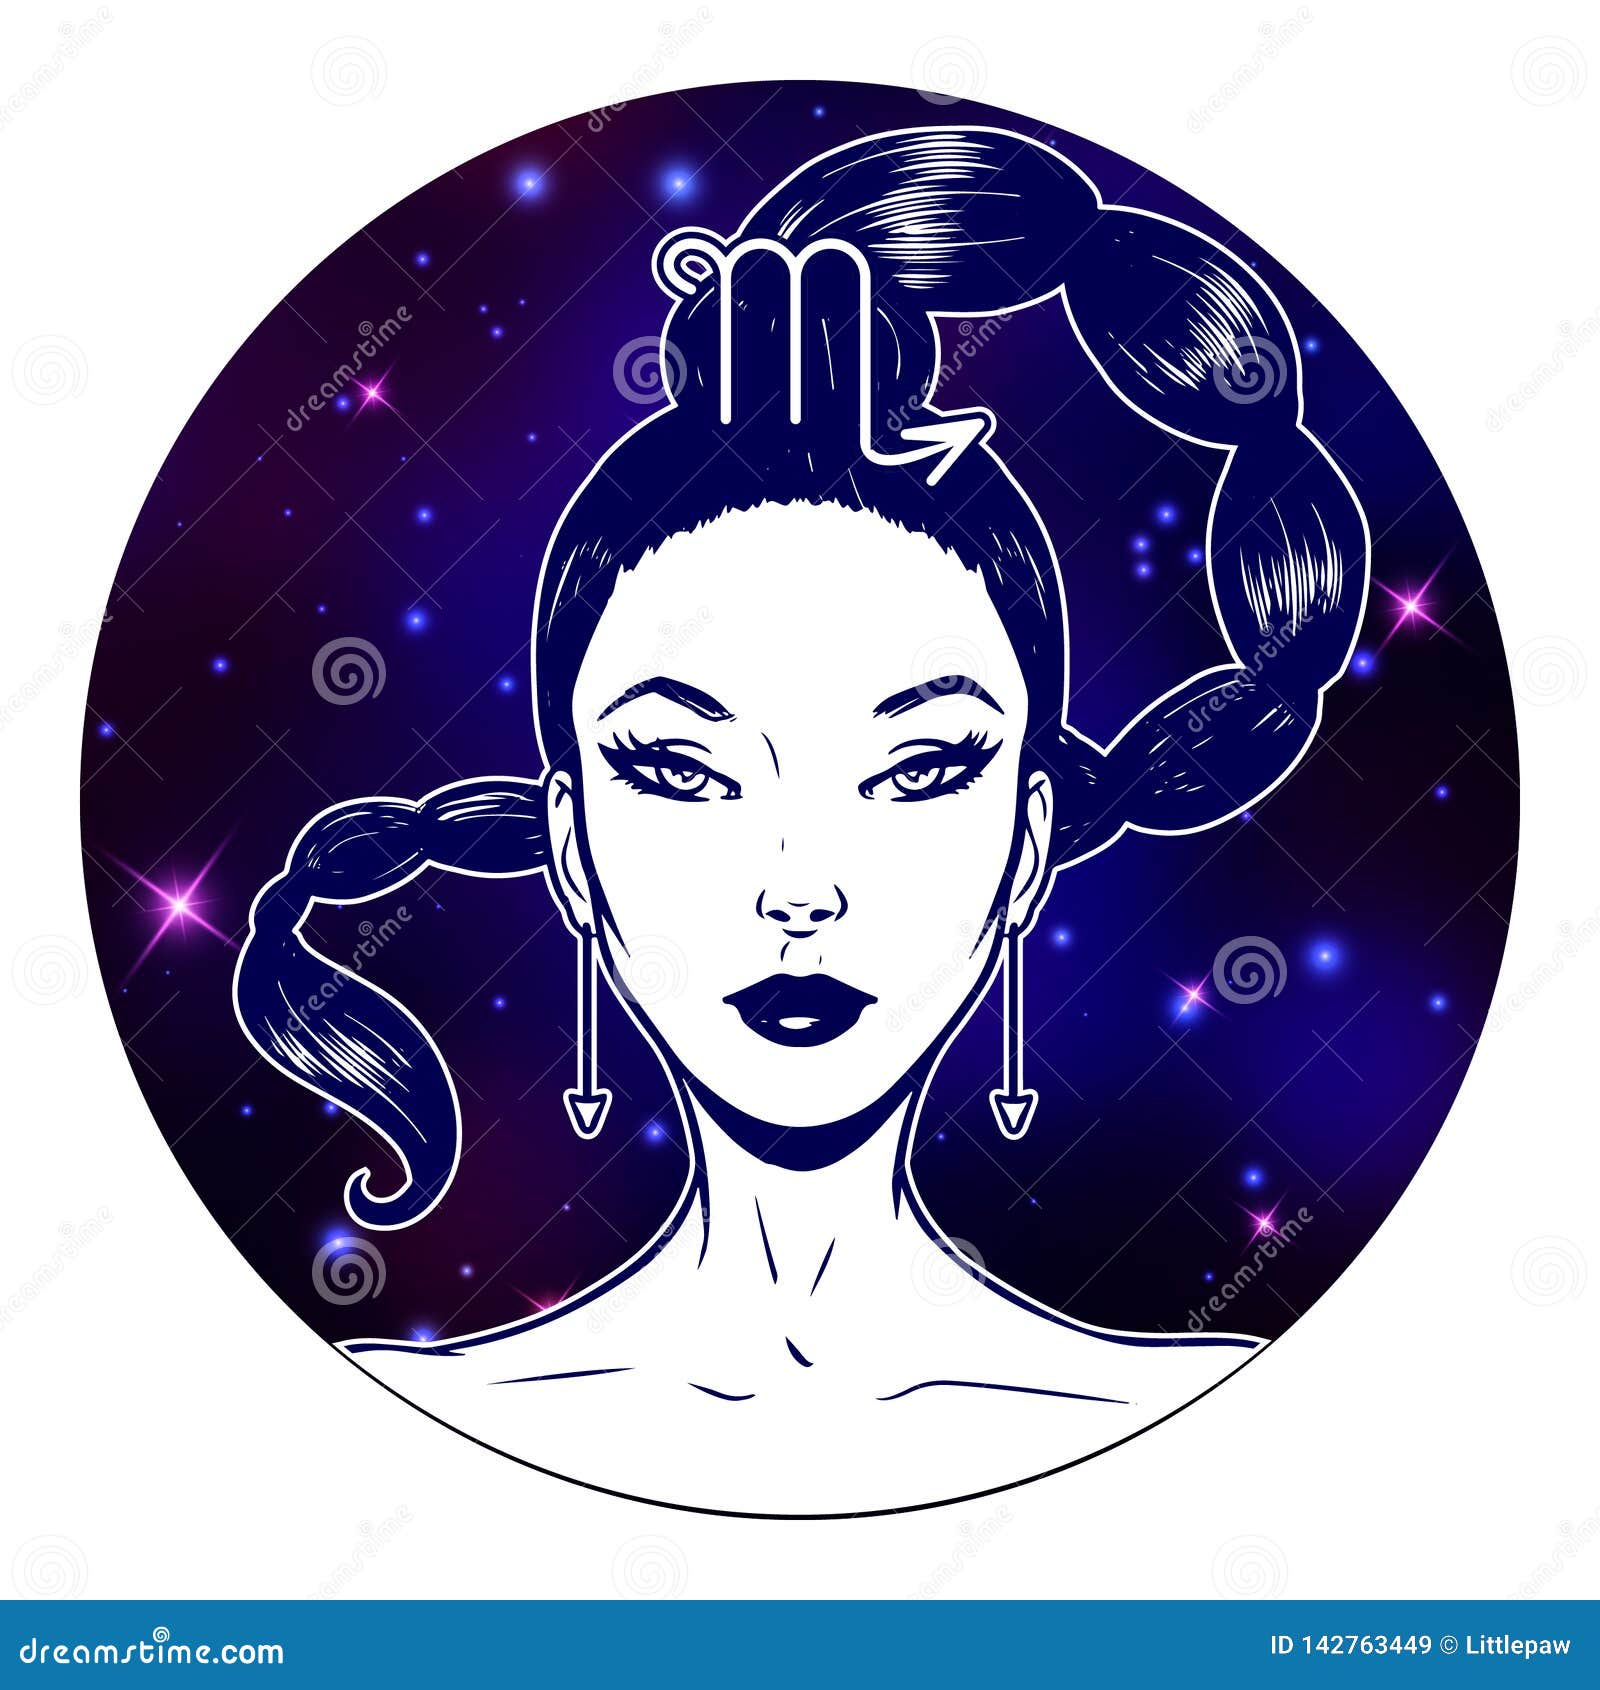 Scorpio Zodiac Sign Artwork, Beautiful Girl Face, Horoscope Symbol ...